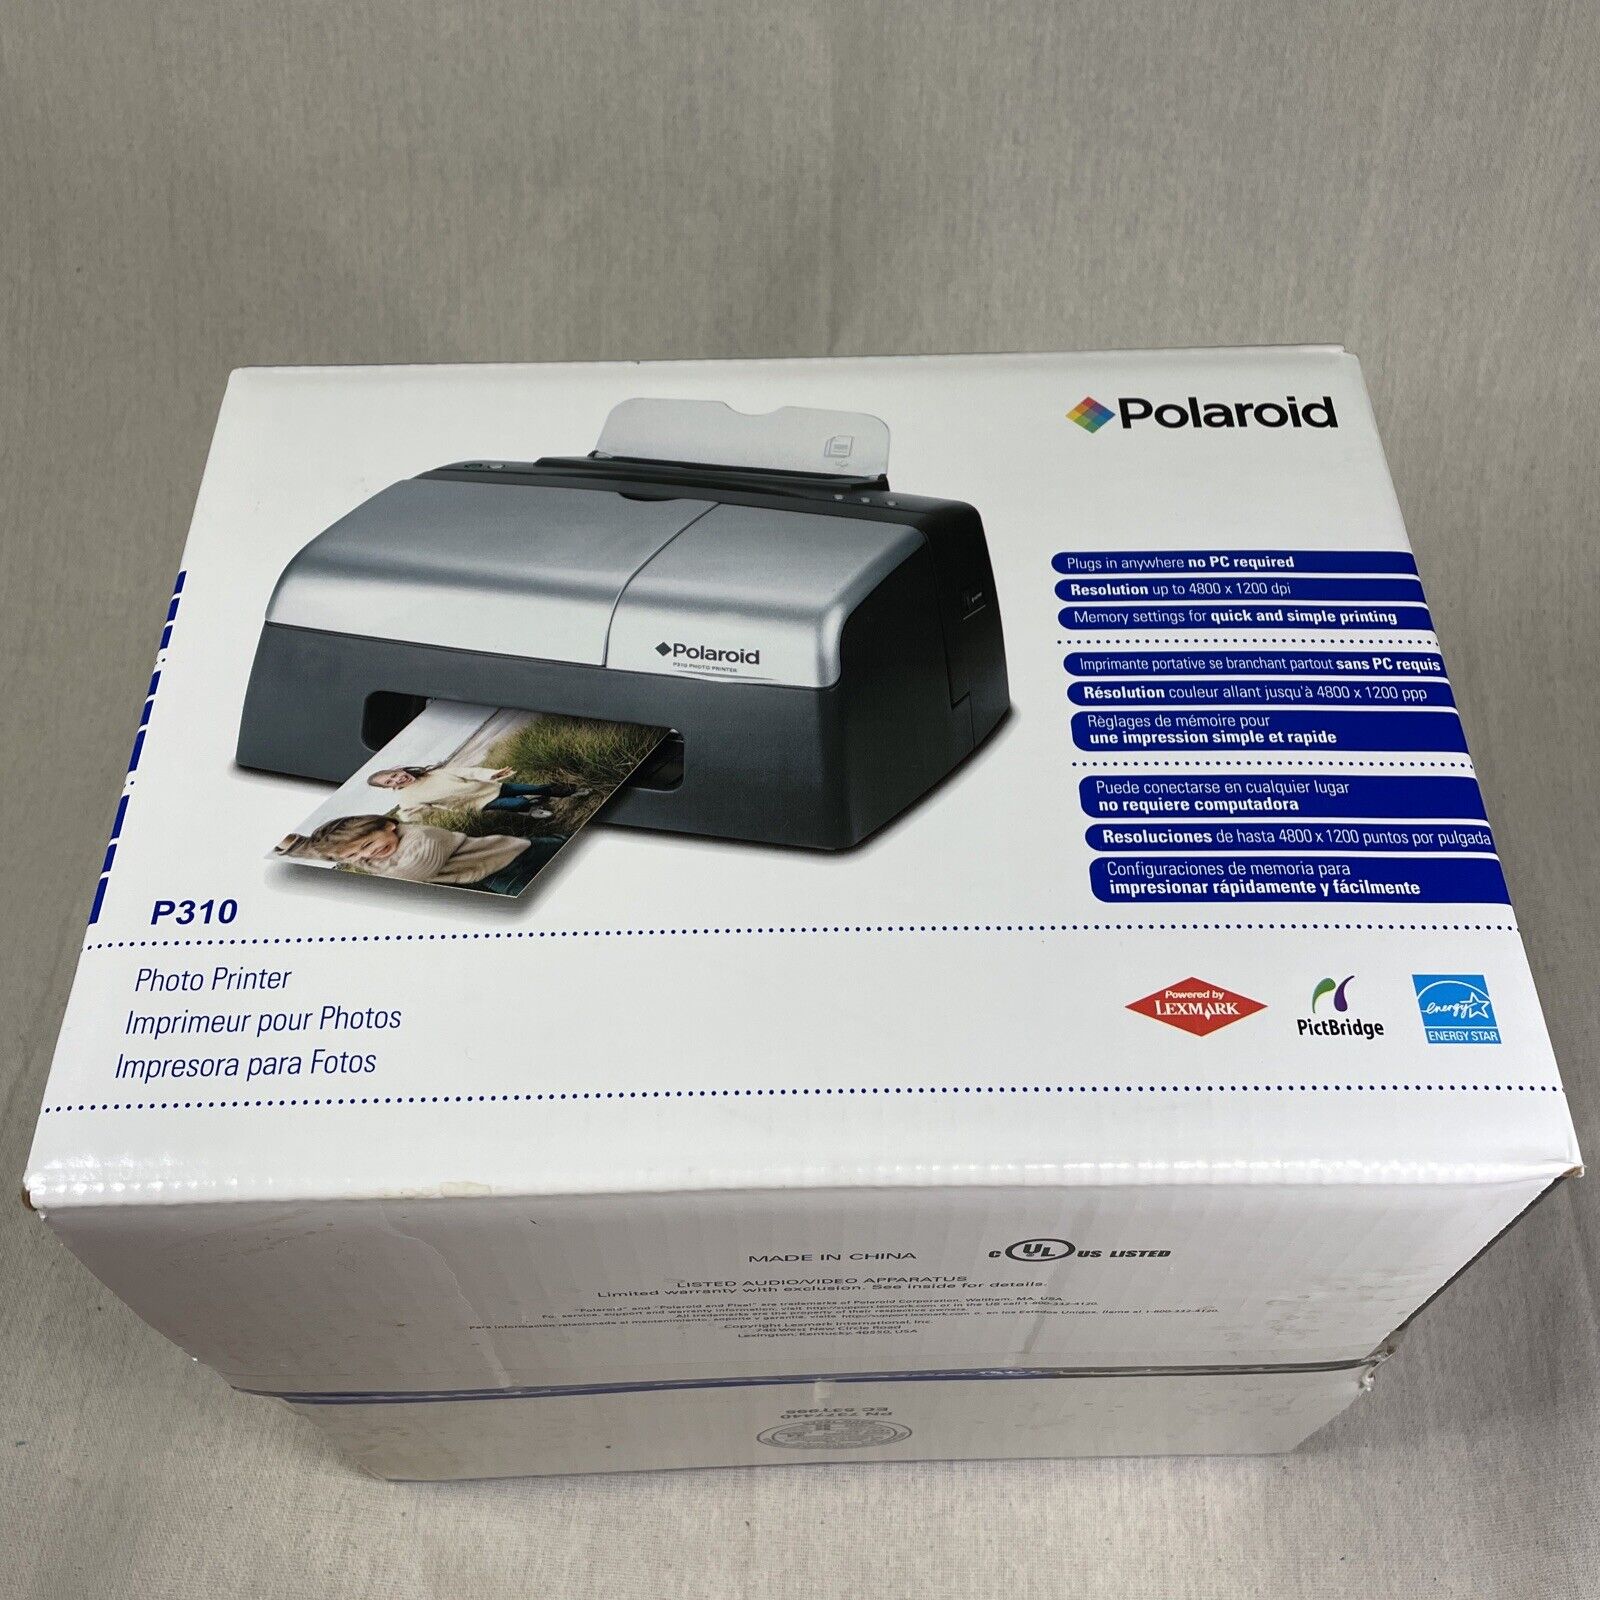 New Old Stock Polaroid P310 Portable 4x6 Photo Printer USB Connect Color